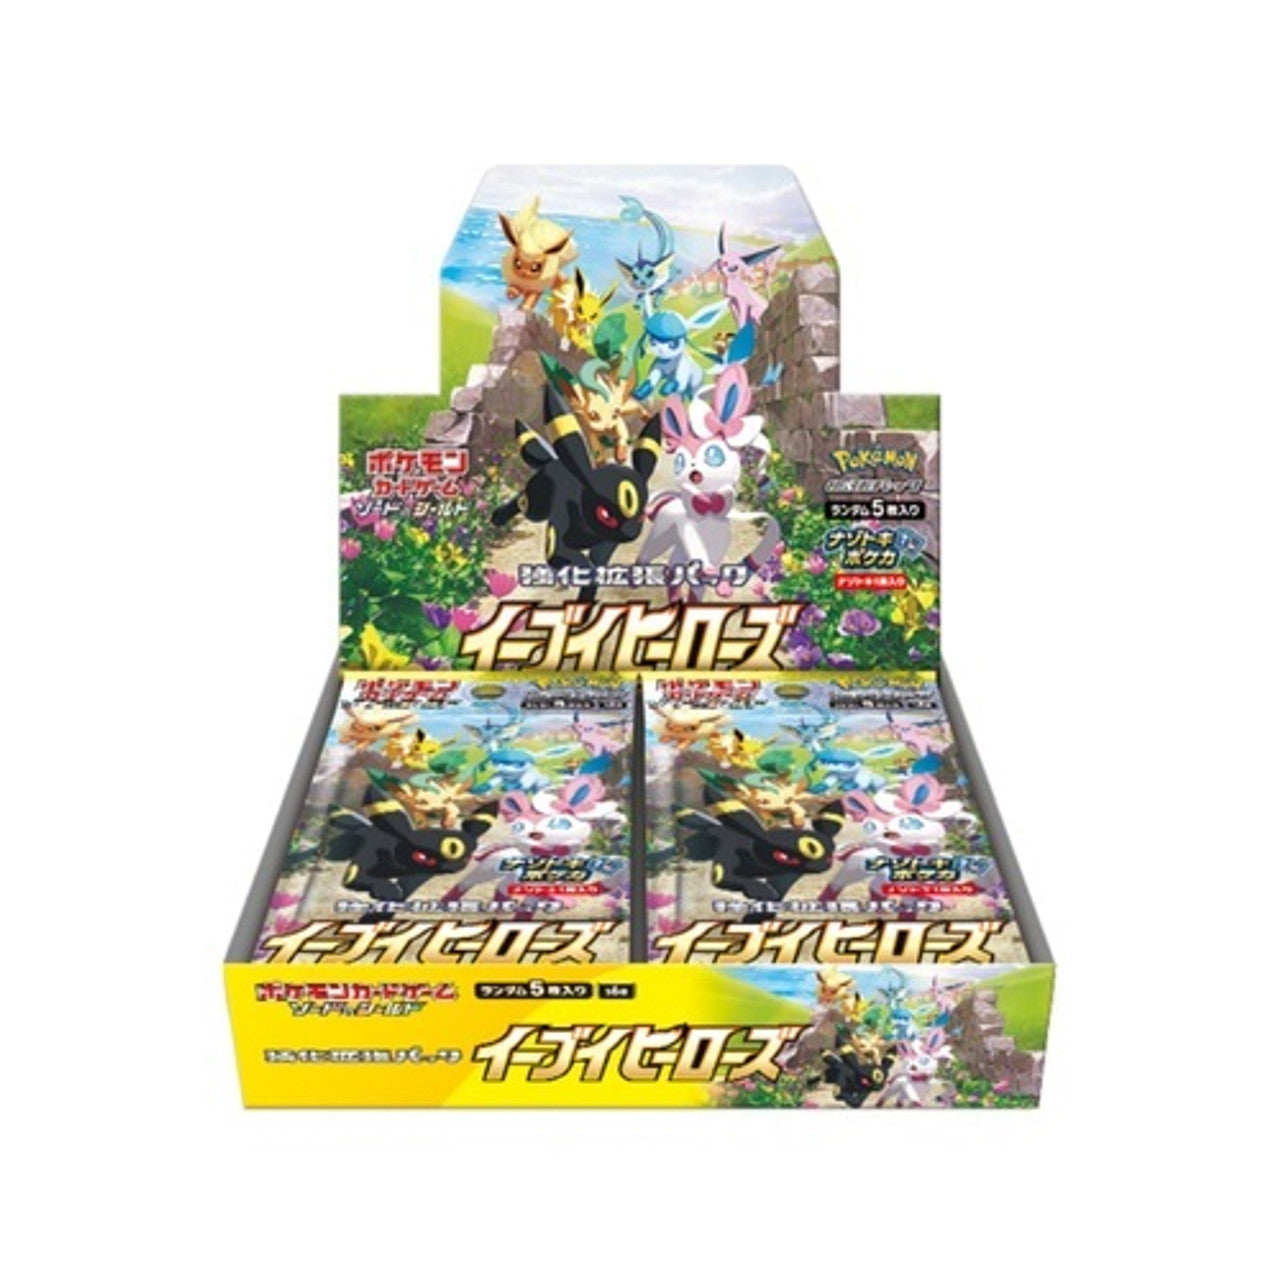 Pokemon Sword & Shield S6a Eevee Heroes Booster Box -  Japanese